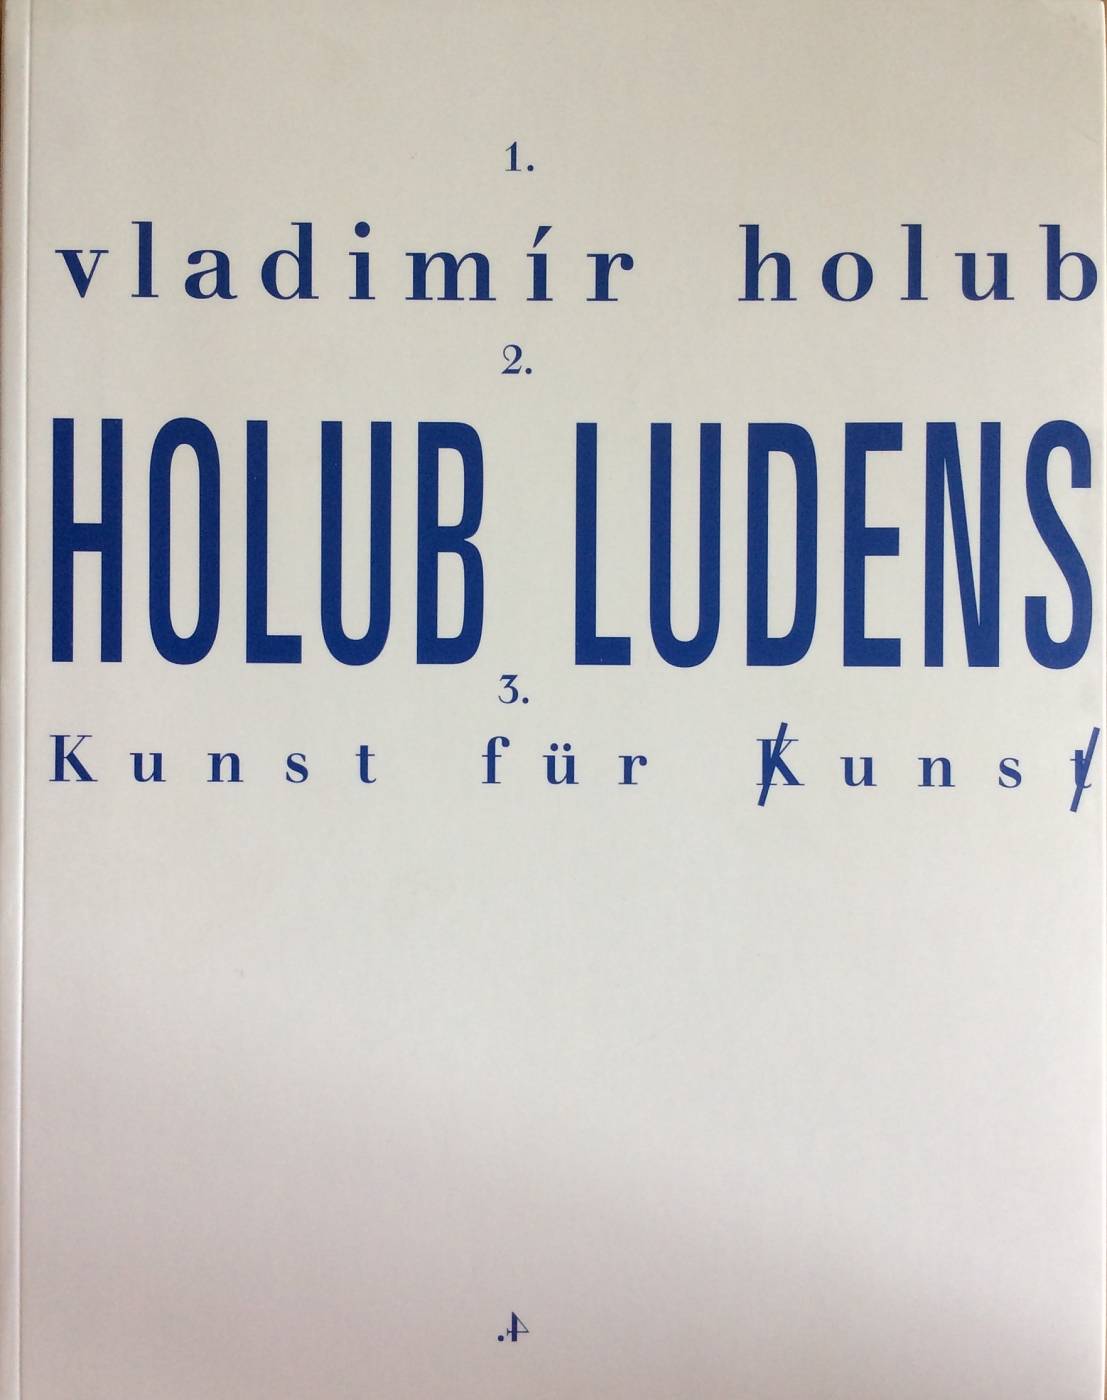 Vladimír Holub / Holub ludens